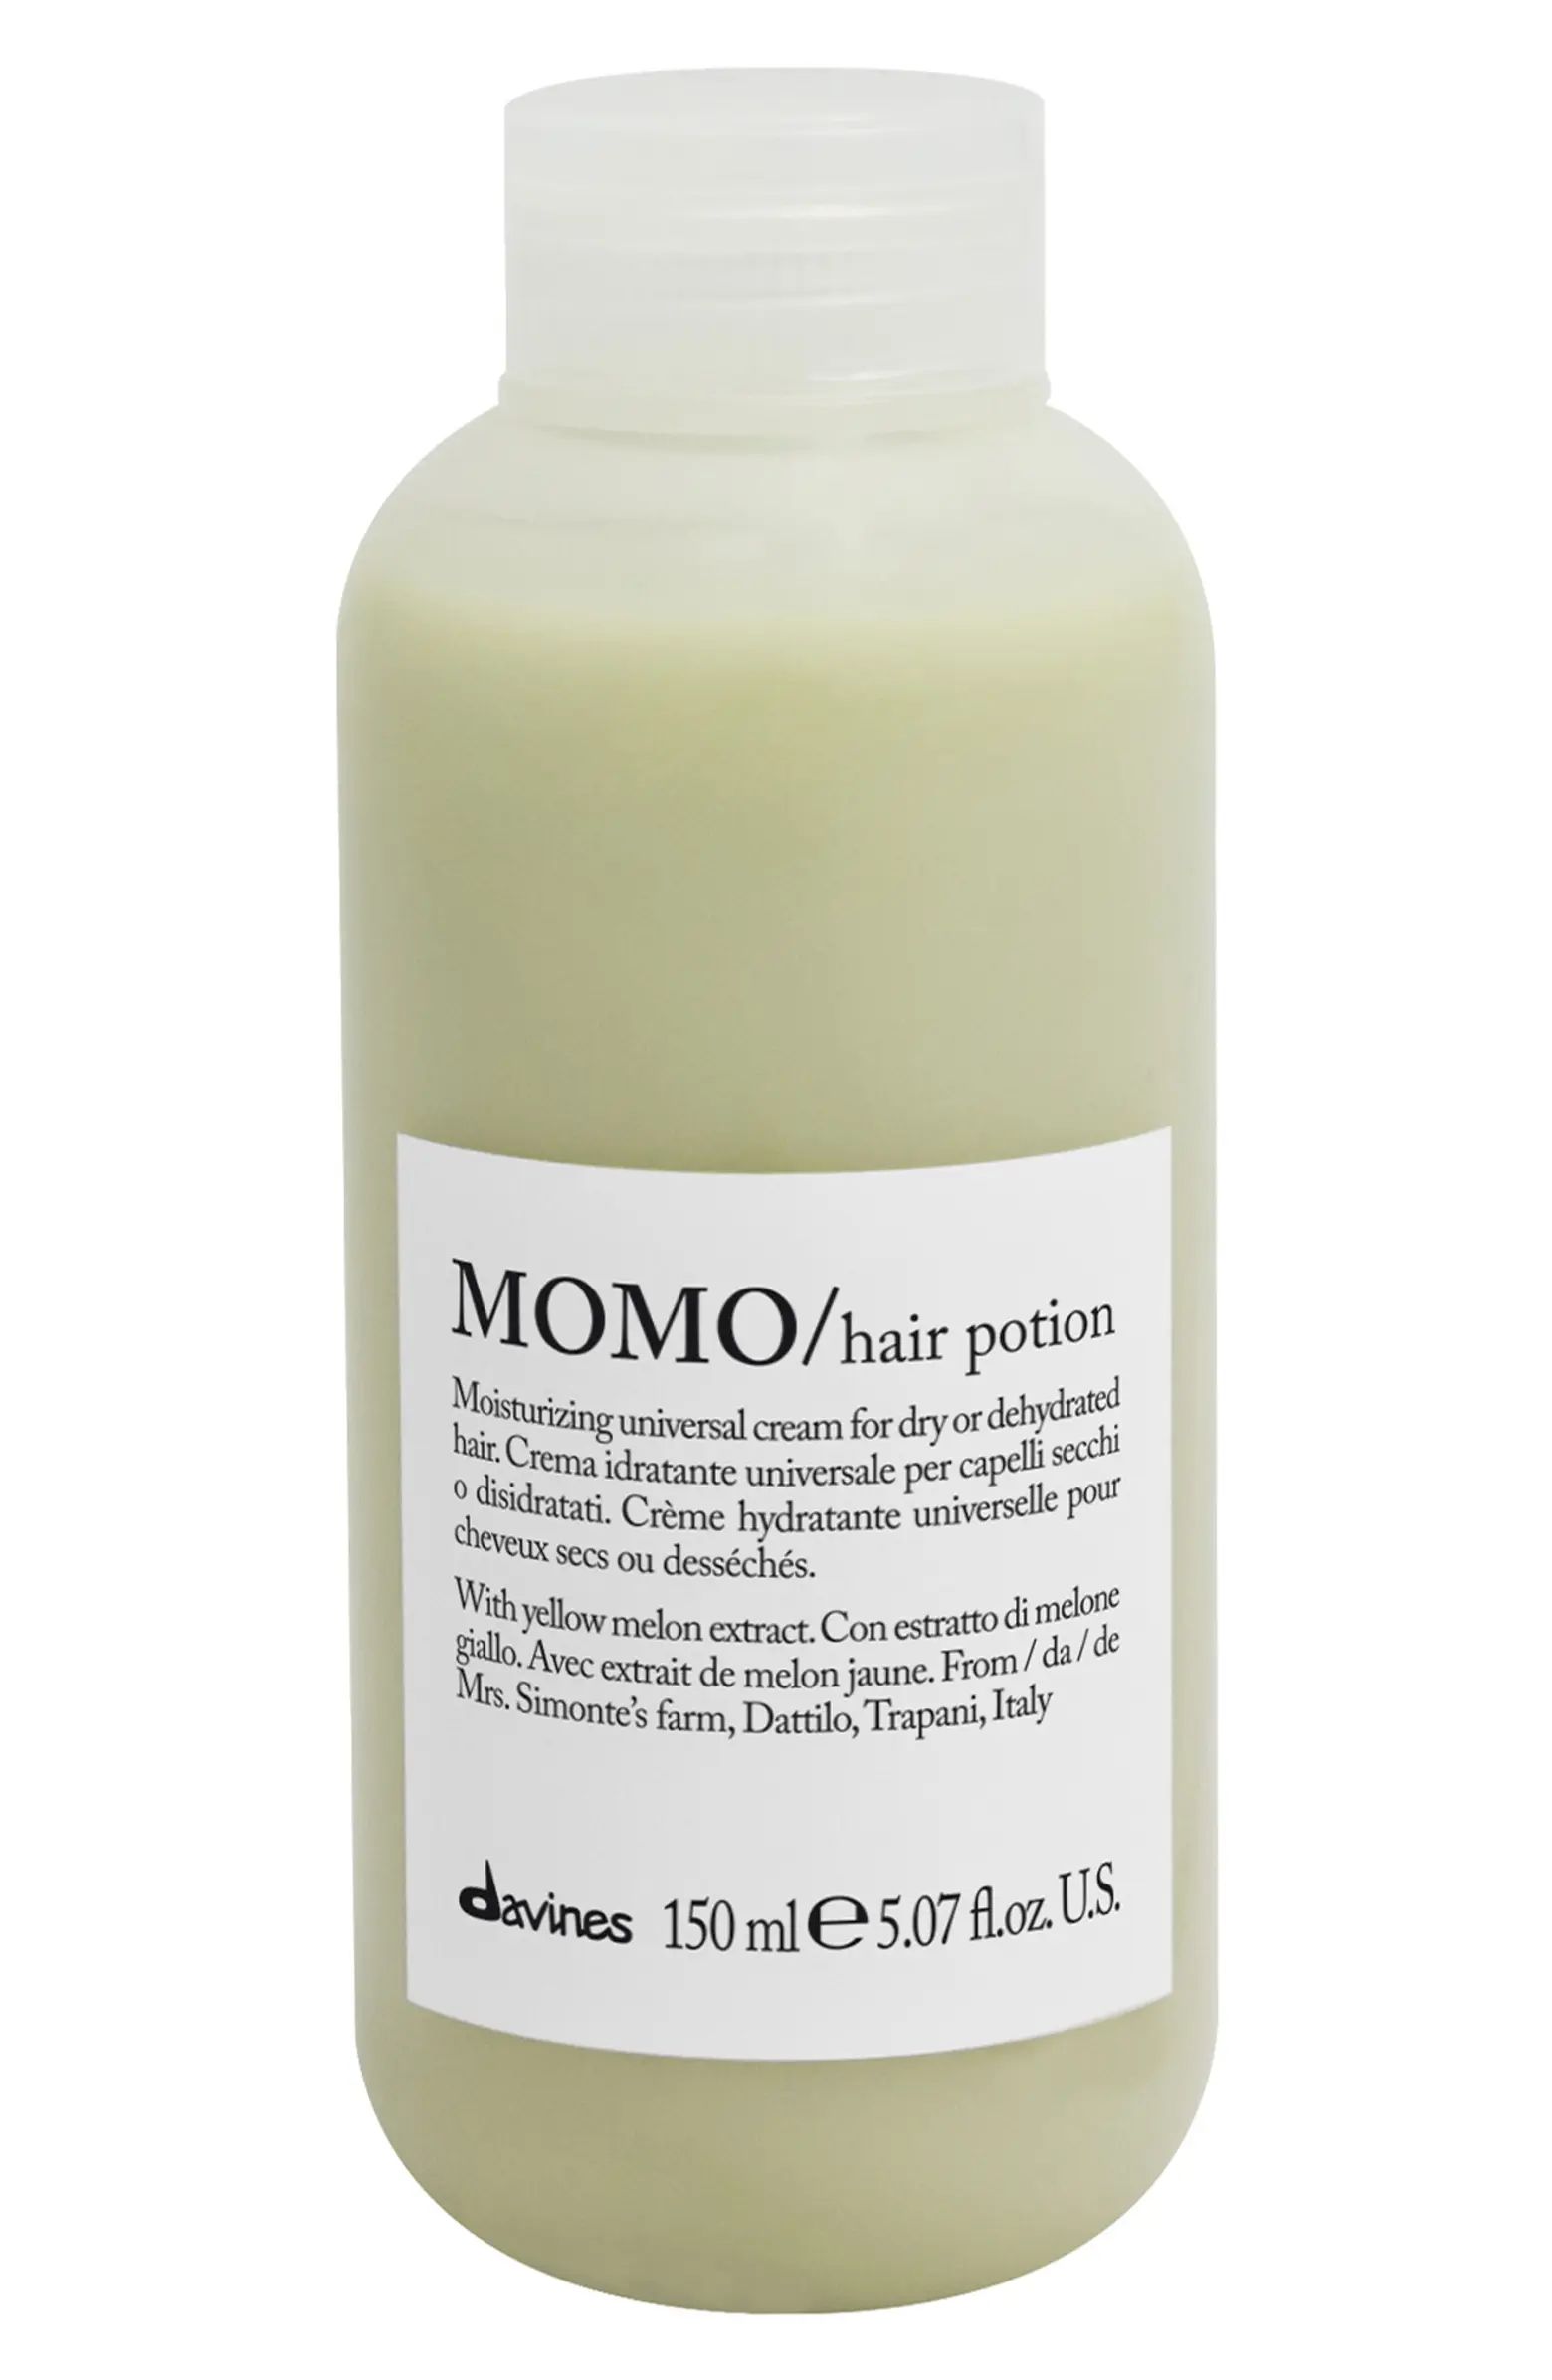 Momo Hair Potion Leave-On Cream | Nordstrom